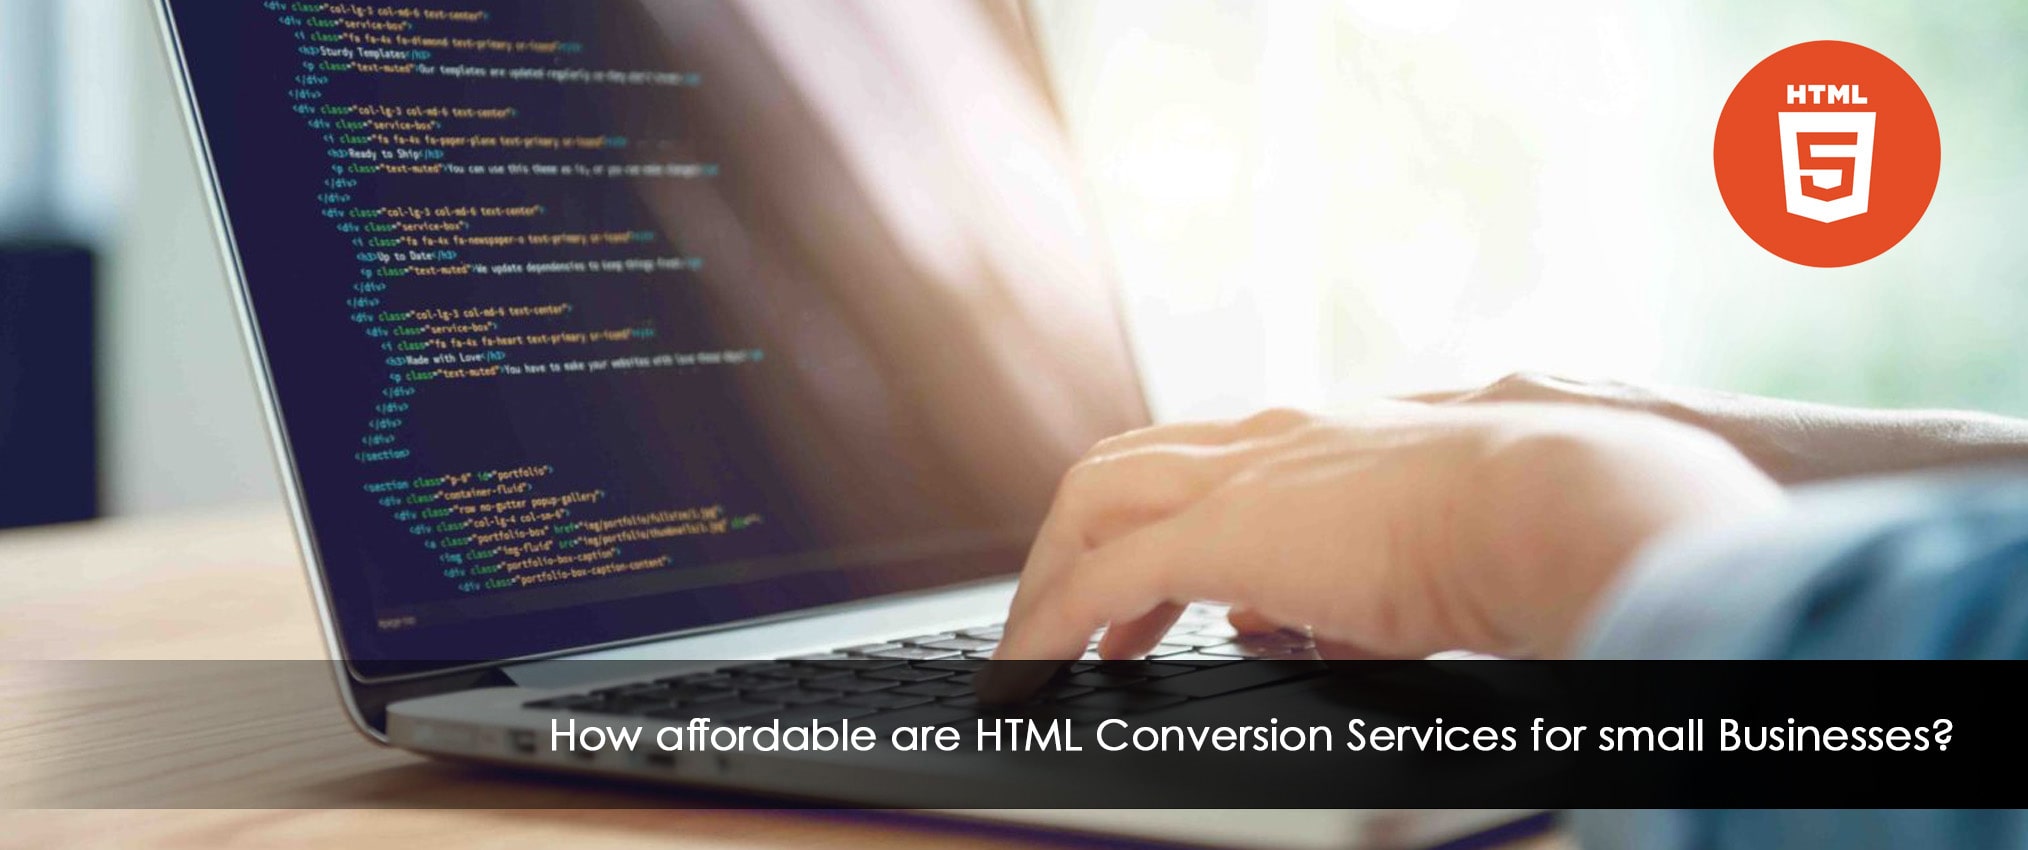 HTML conversion services